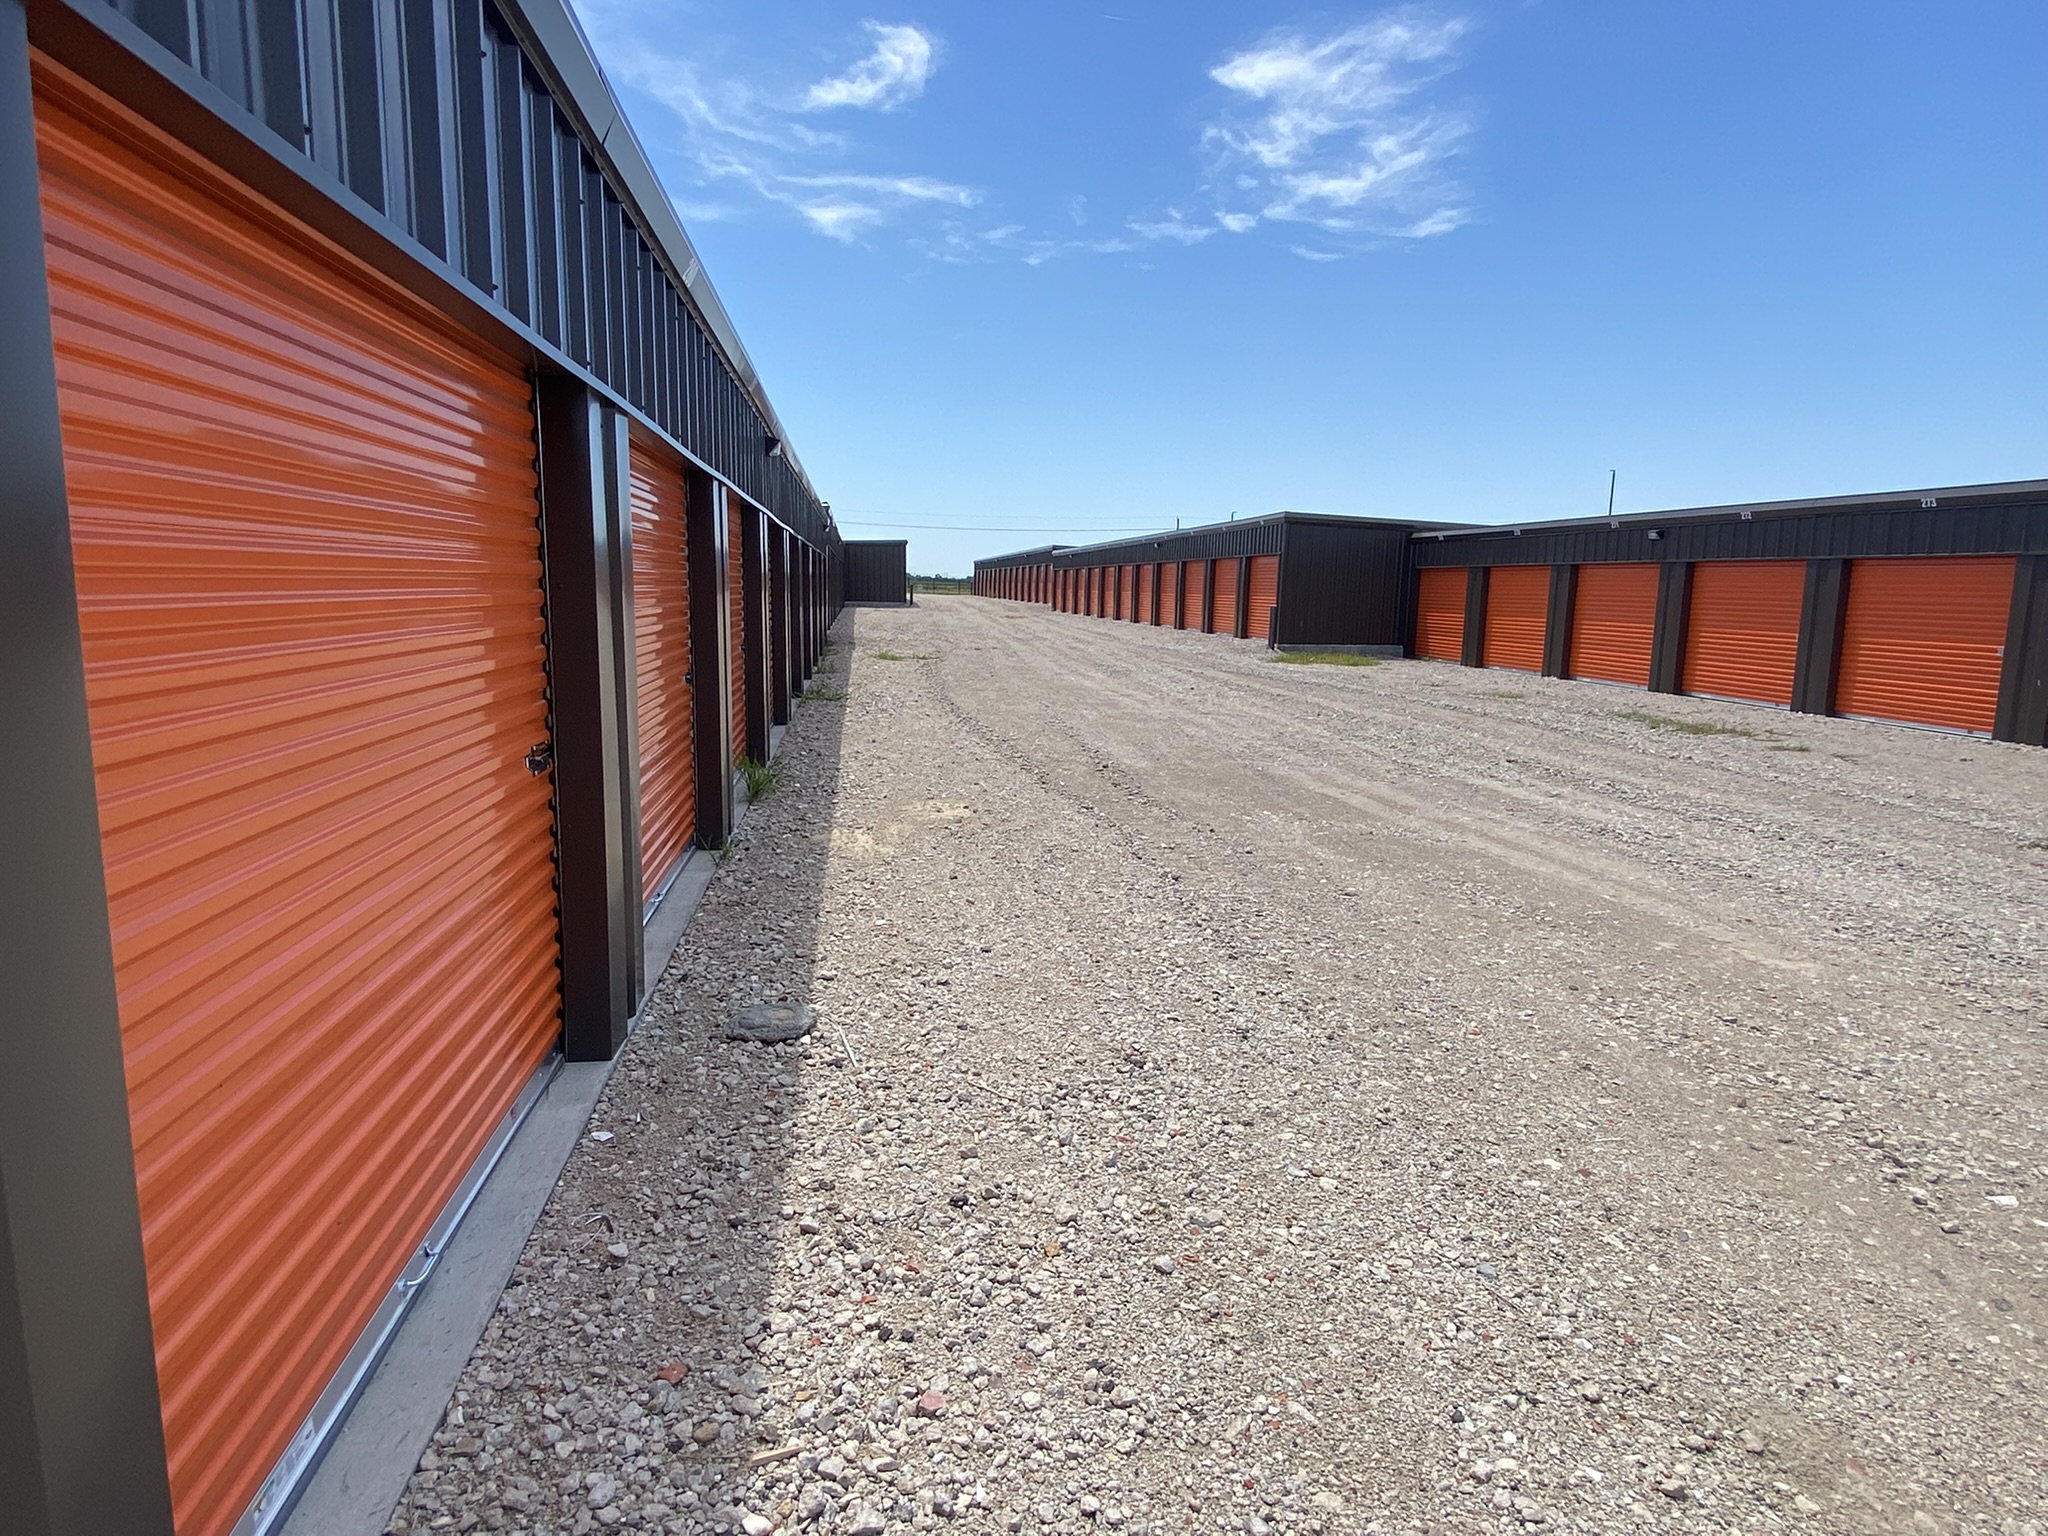 Two rows of self-storage units at Storage Ninjas in Grand Island Nebraska